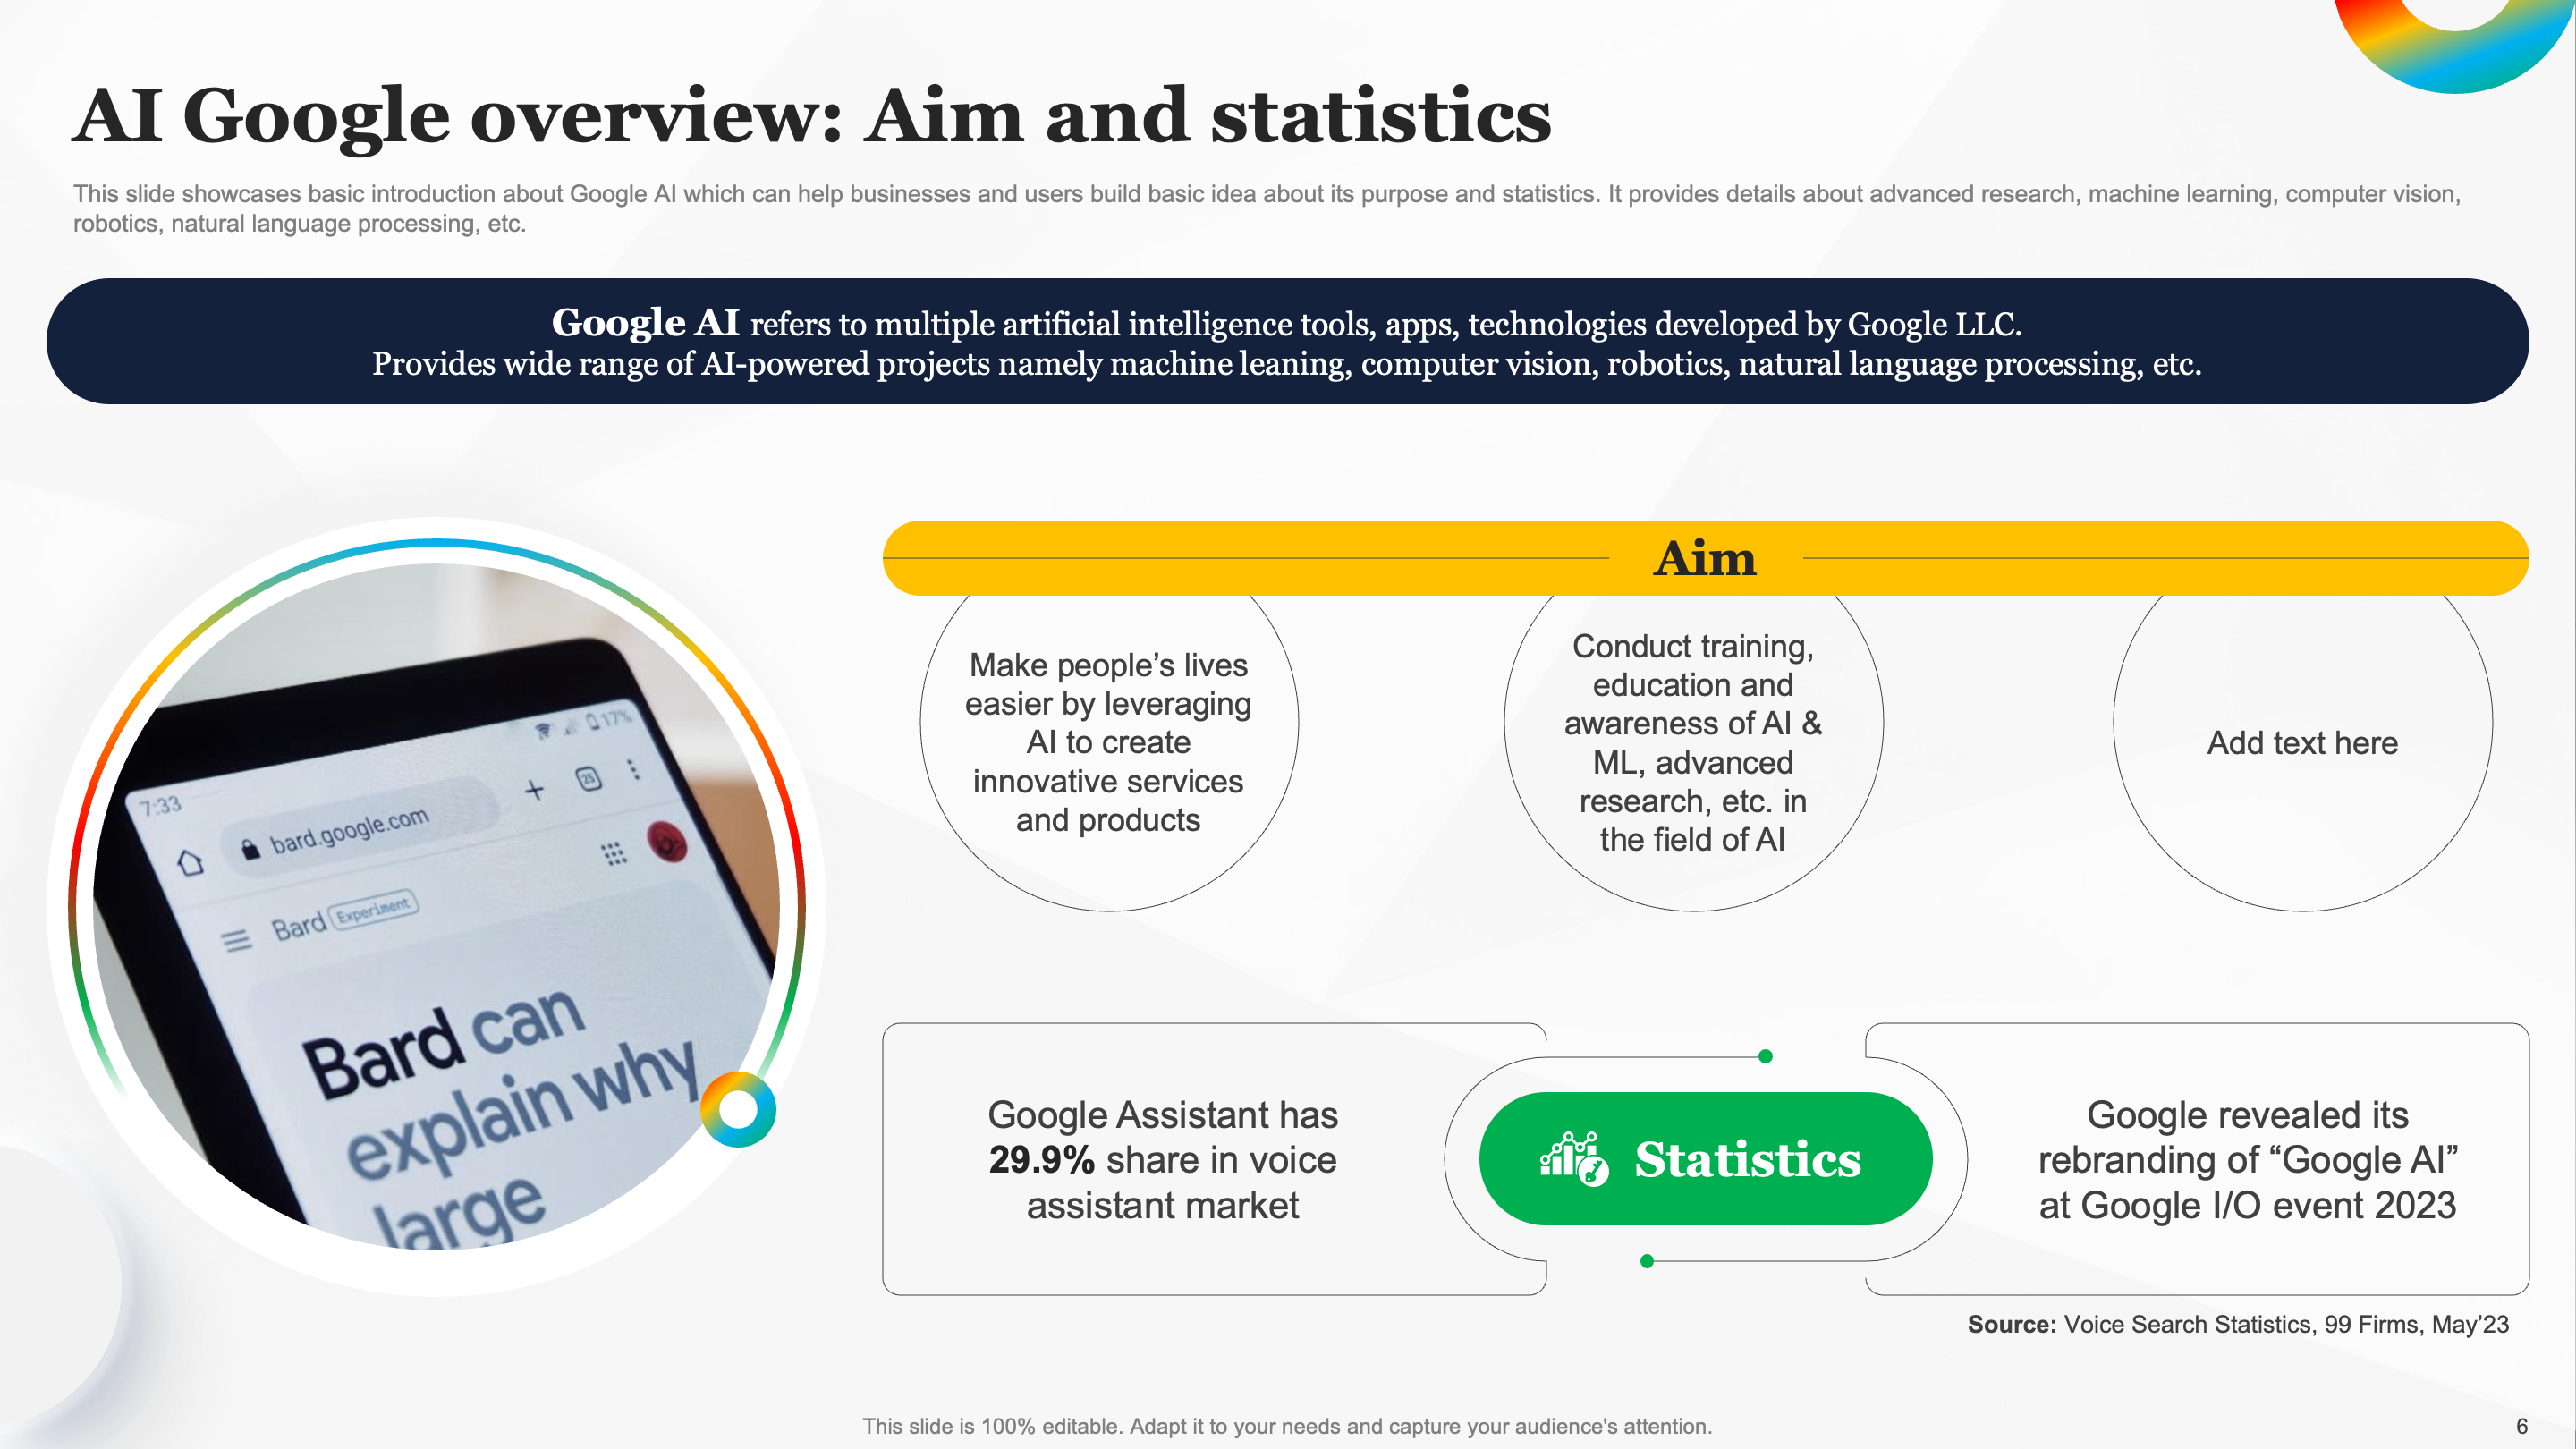 AI Google Overview: Aim and Statistics